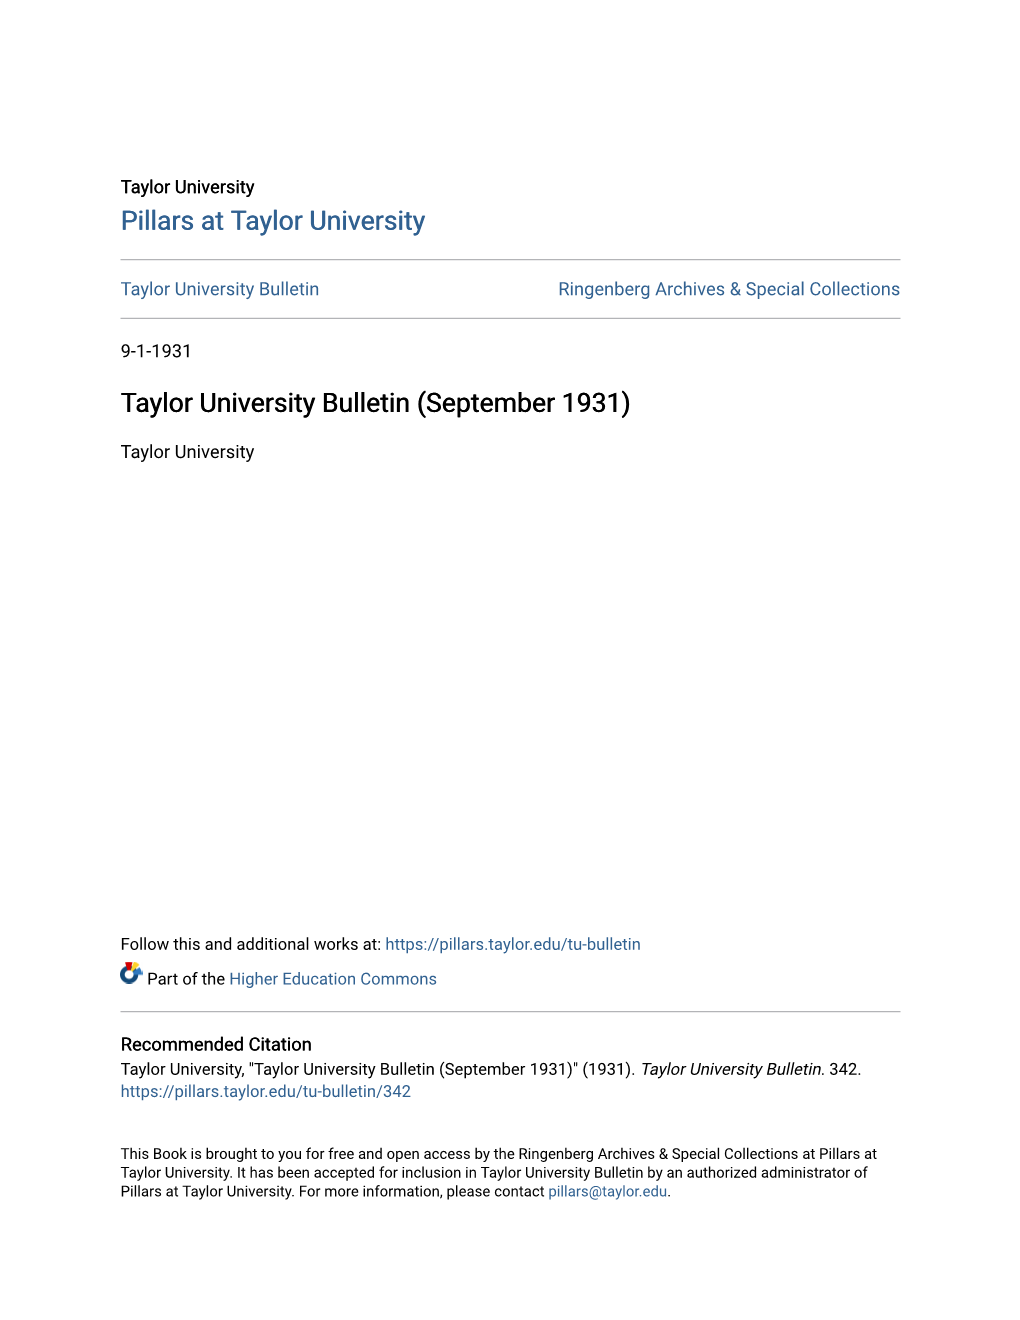 Taylor University Bulletin (September 1931)